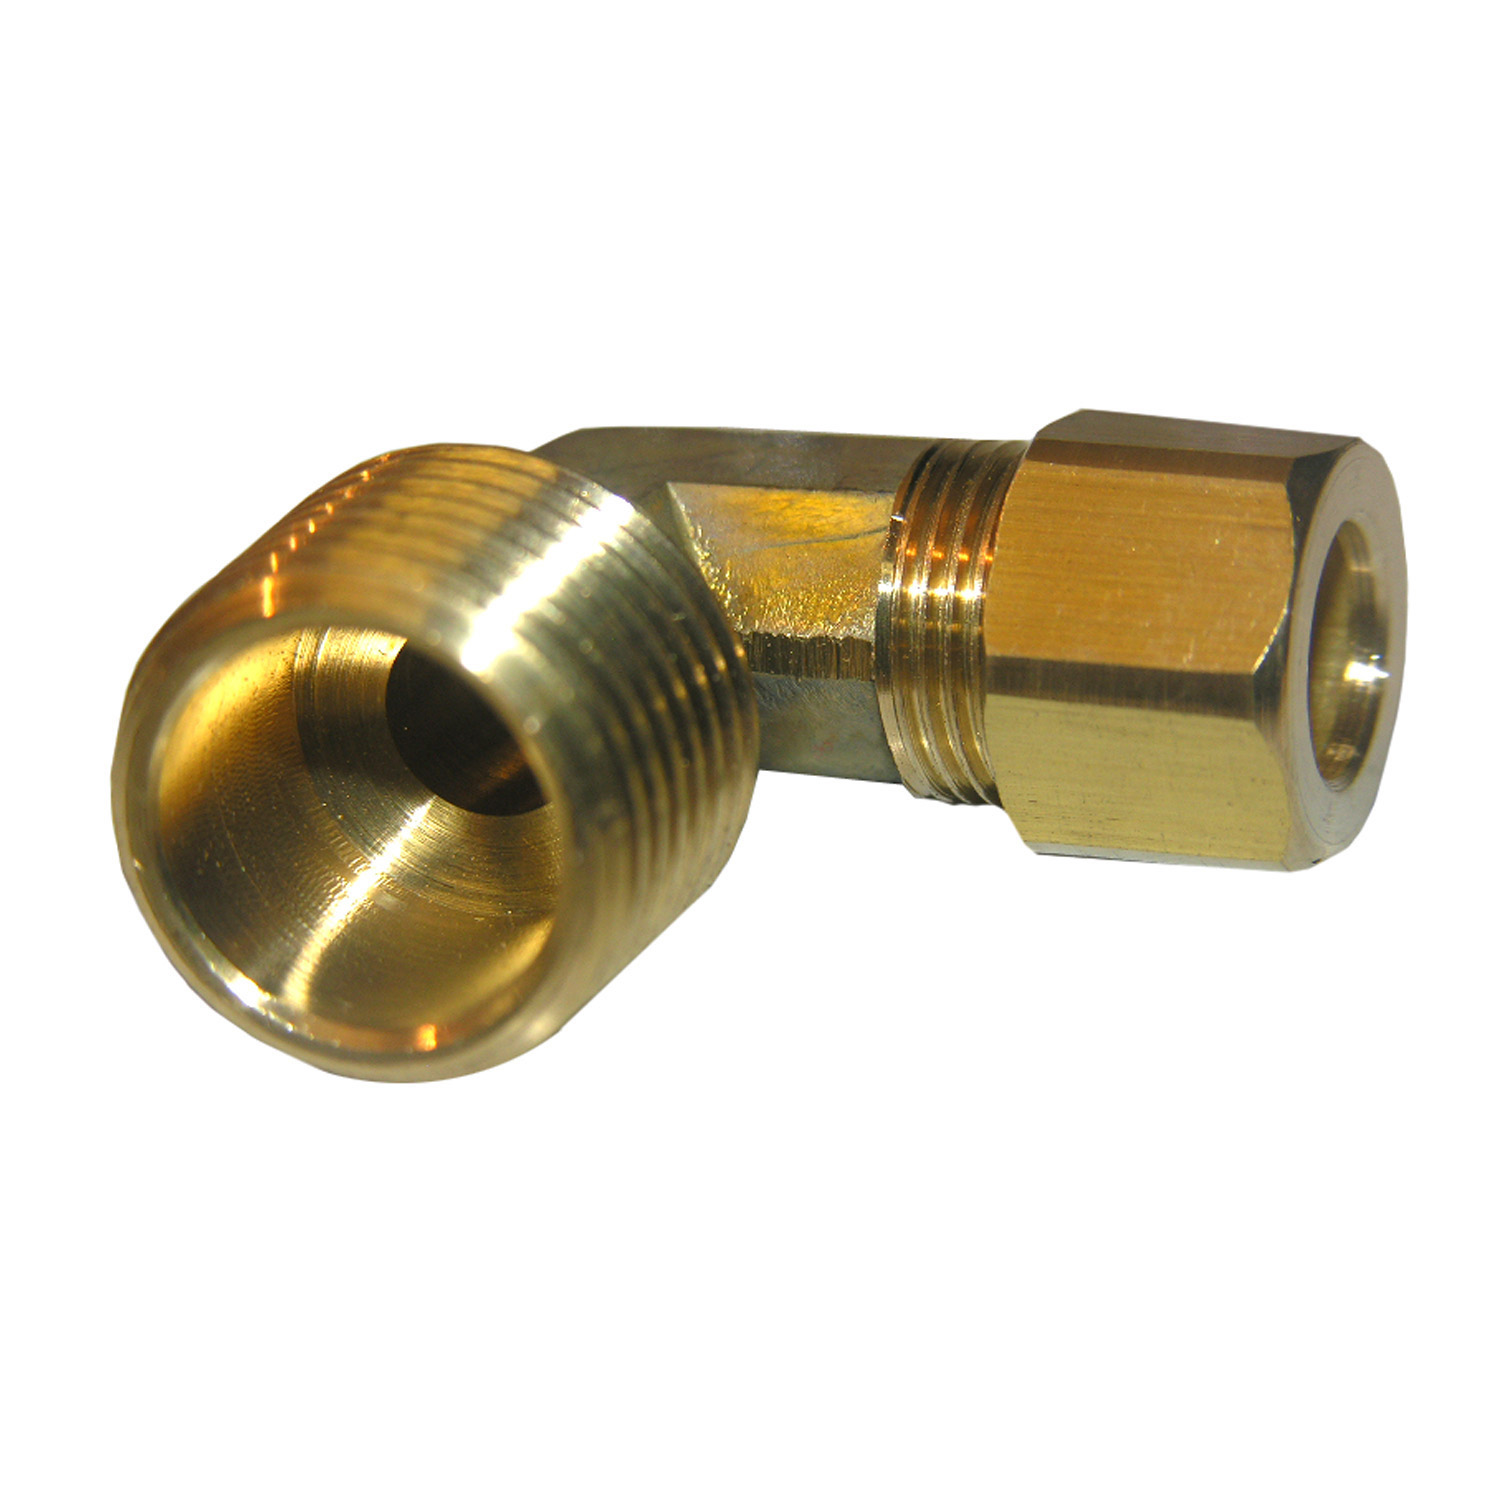 17-6933 Pipe Elbow, 3/8 x 1/2 in, Compression x MIP, 90 deg Angle, Brass, 150 psi Pressure